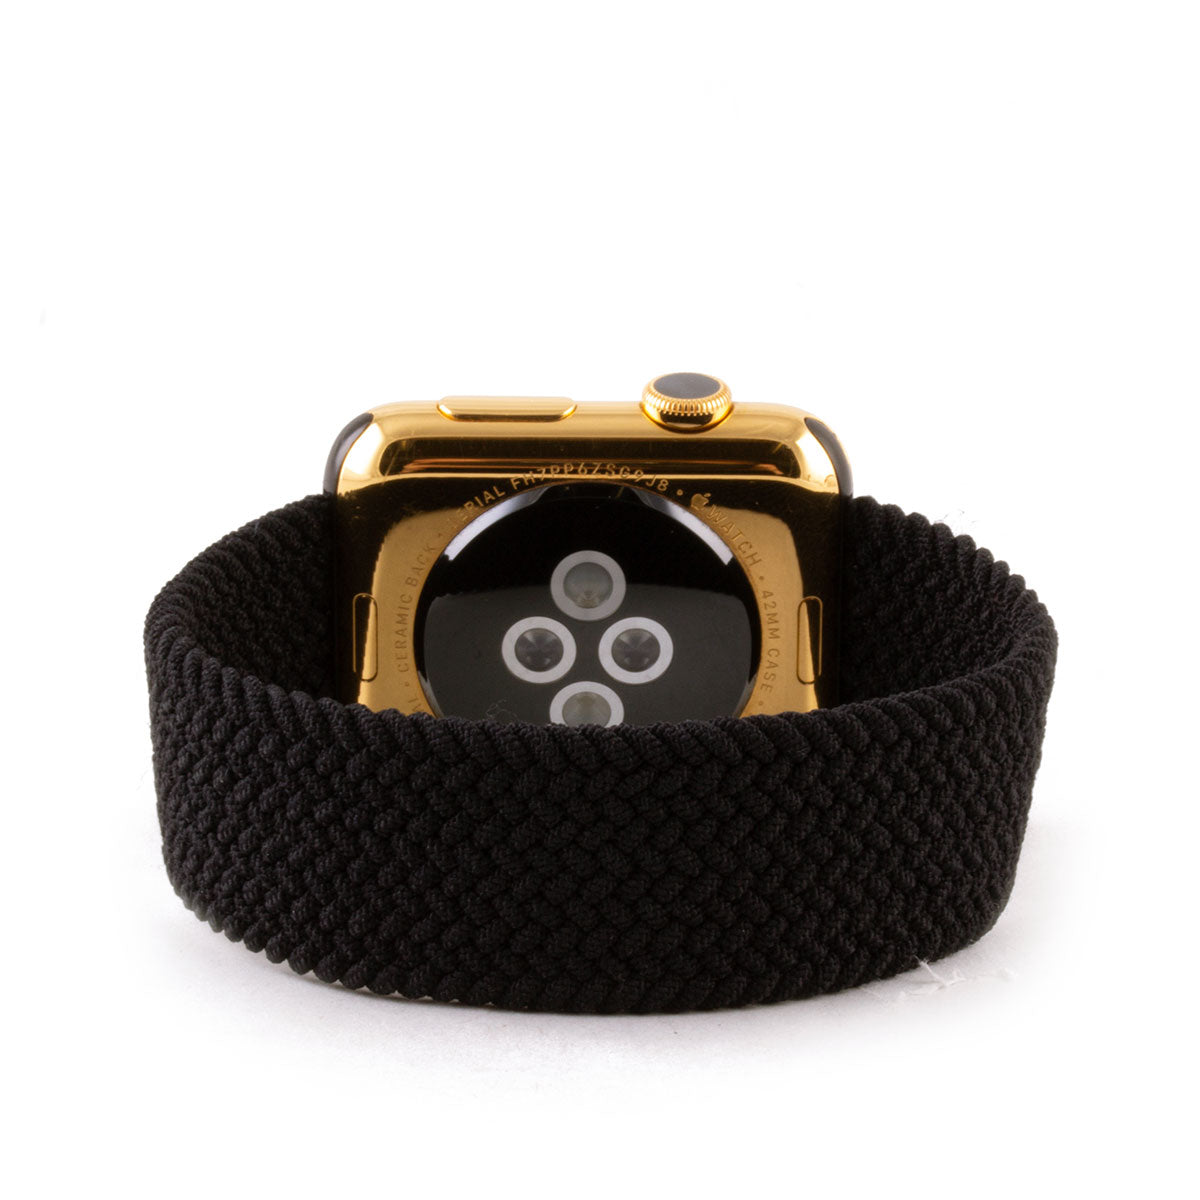 Strap-it Strap-it Bracelet cuir à motifs Apple Watch (noir)